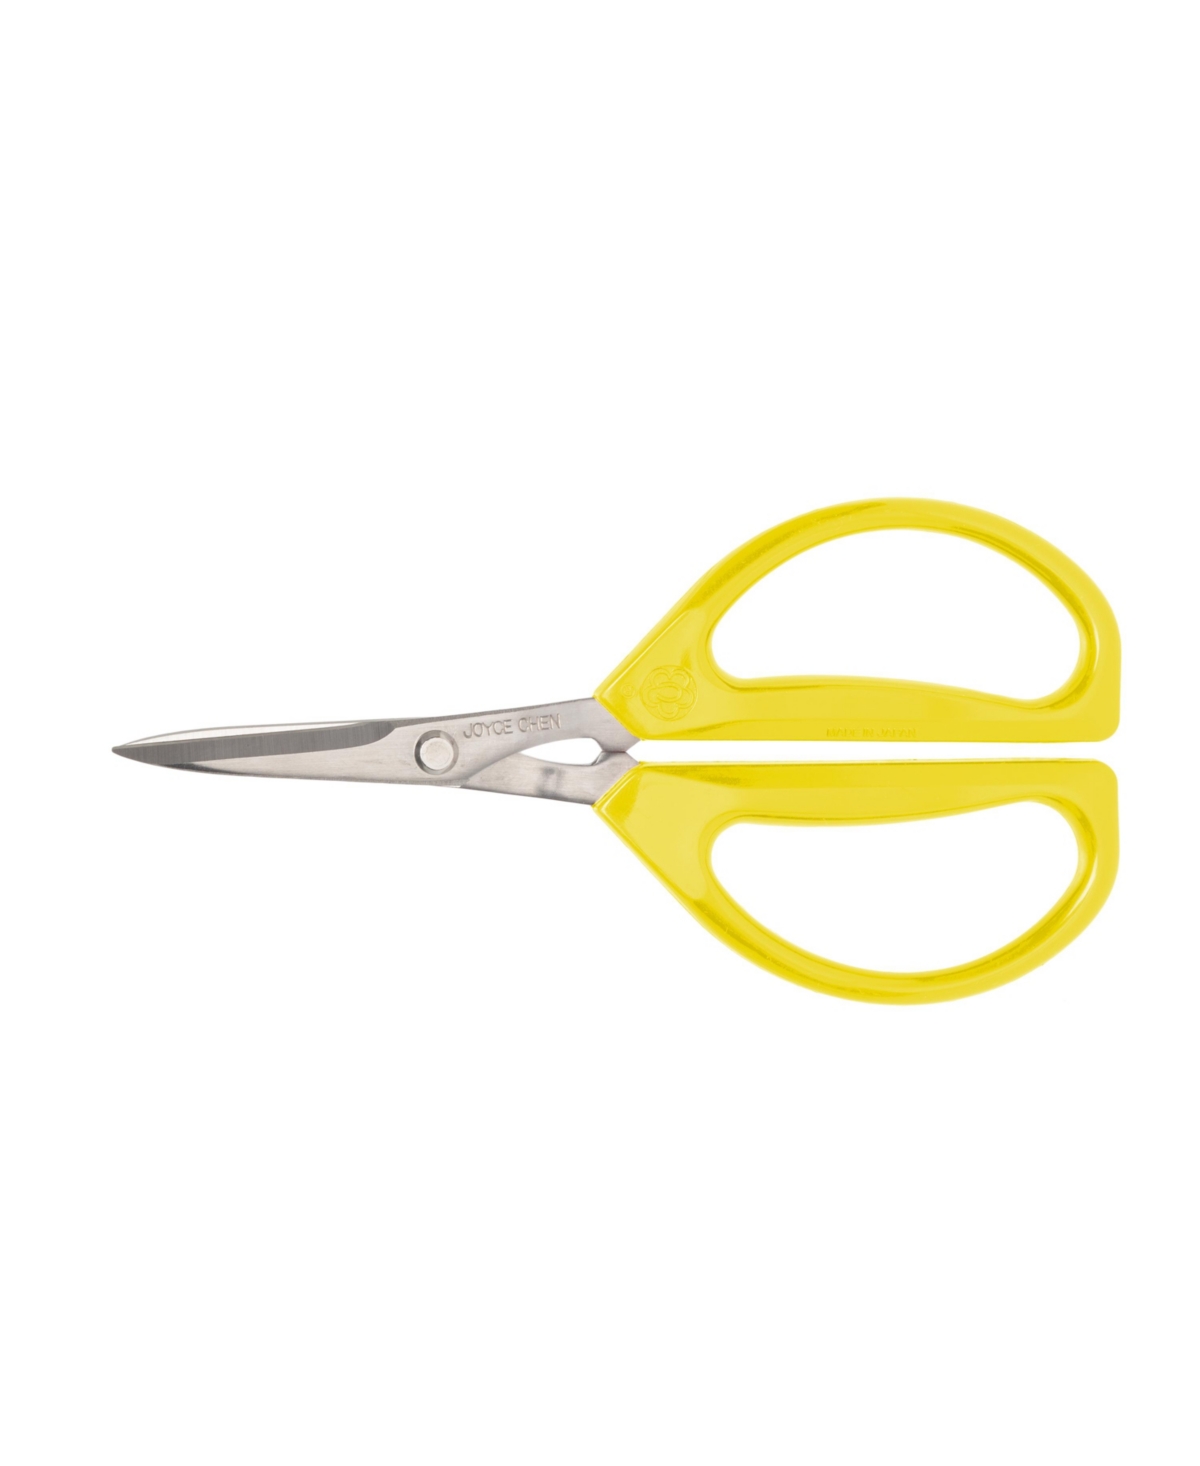 Joyce Chen Original Unlimited Kitchen Scissors With Handles In Yellow